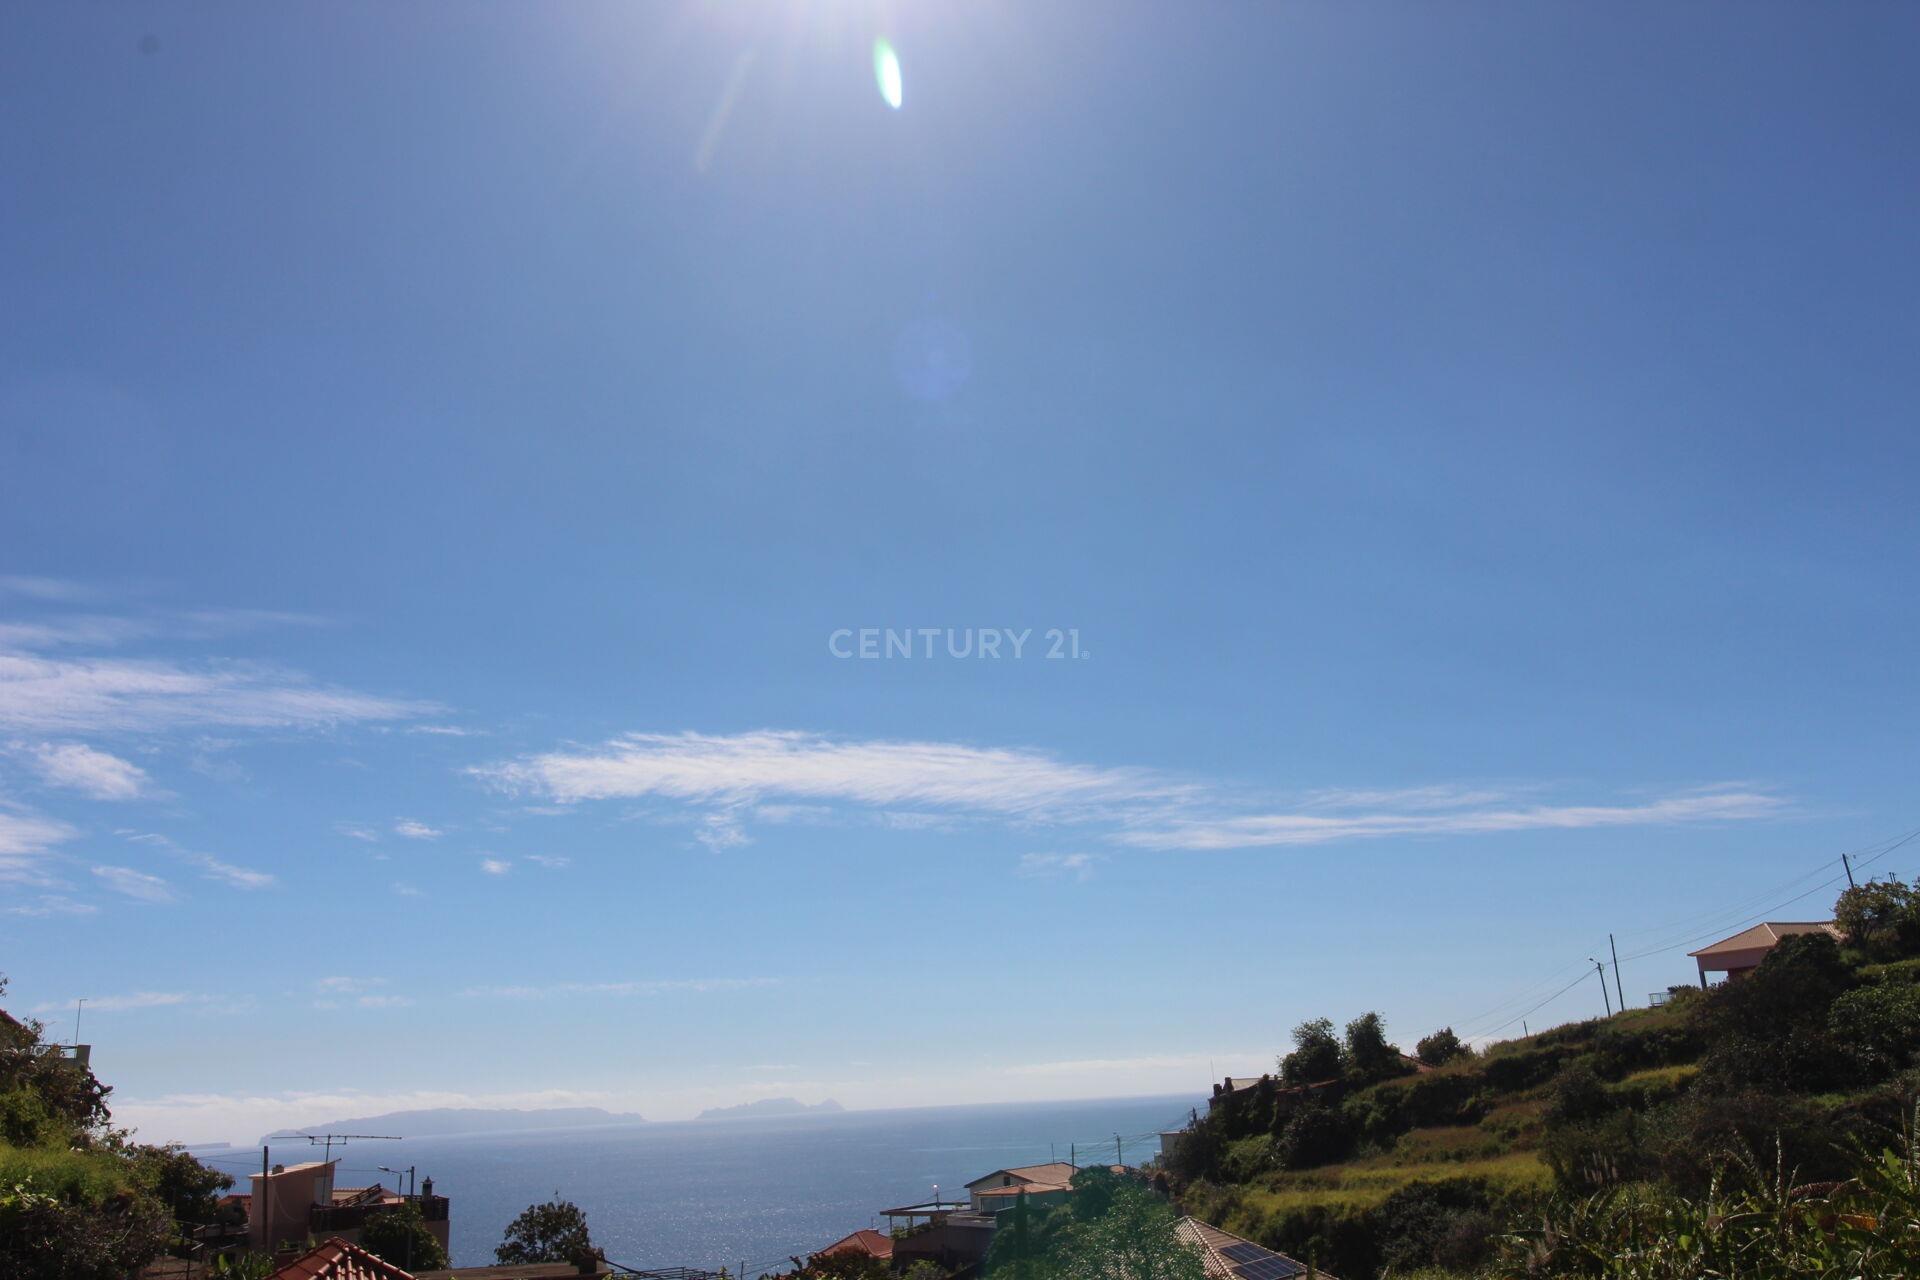 Luminous Land in Gaula, Santa Cruz, Madeira